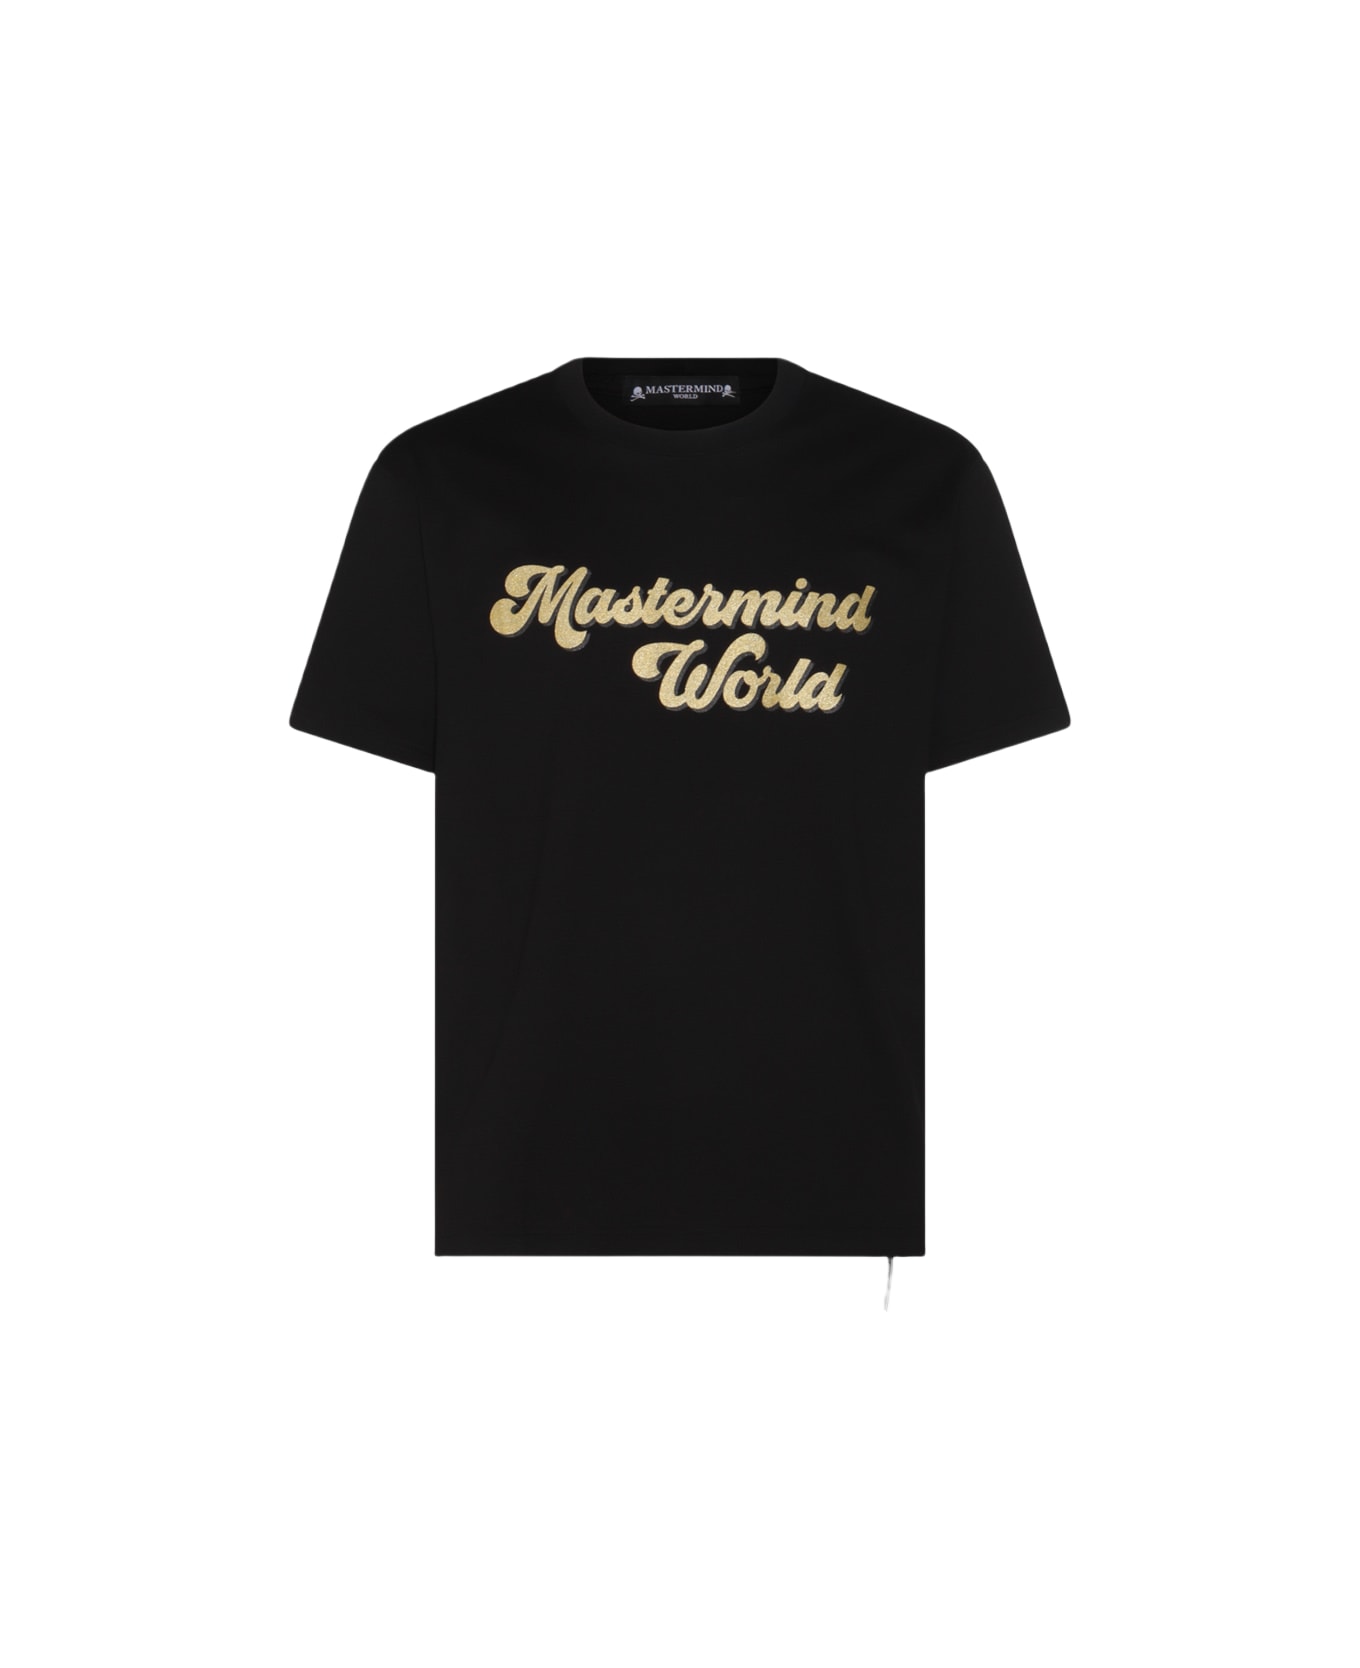 MASTERMIND WORLD Black Cotton T-shirt - Black